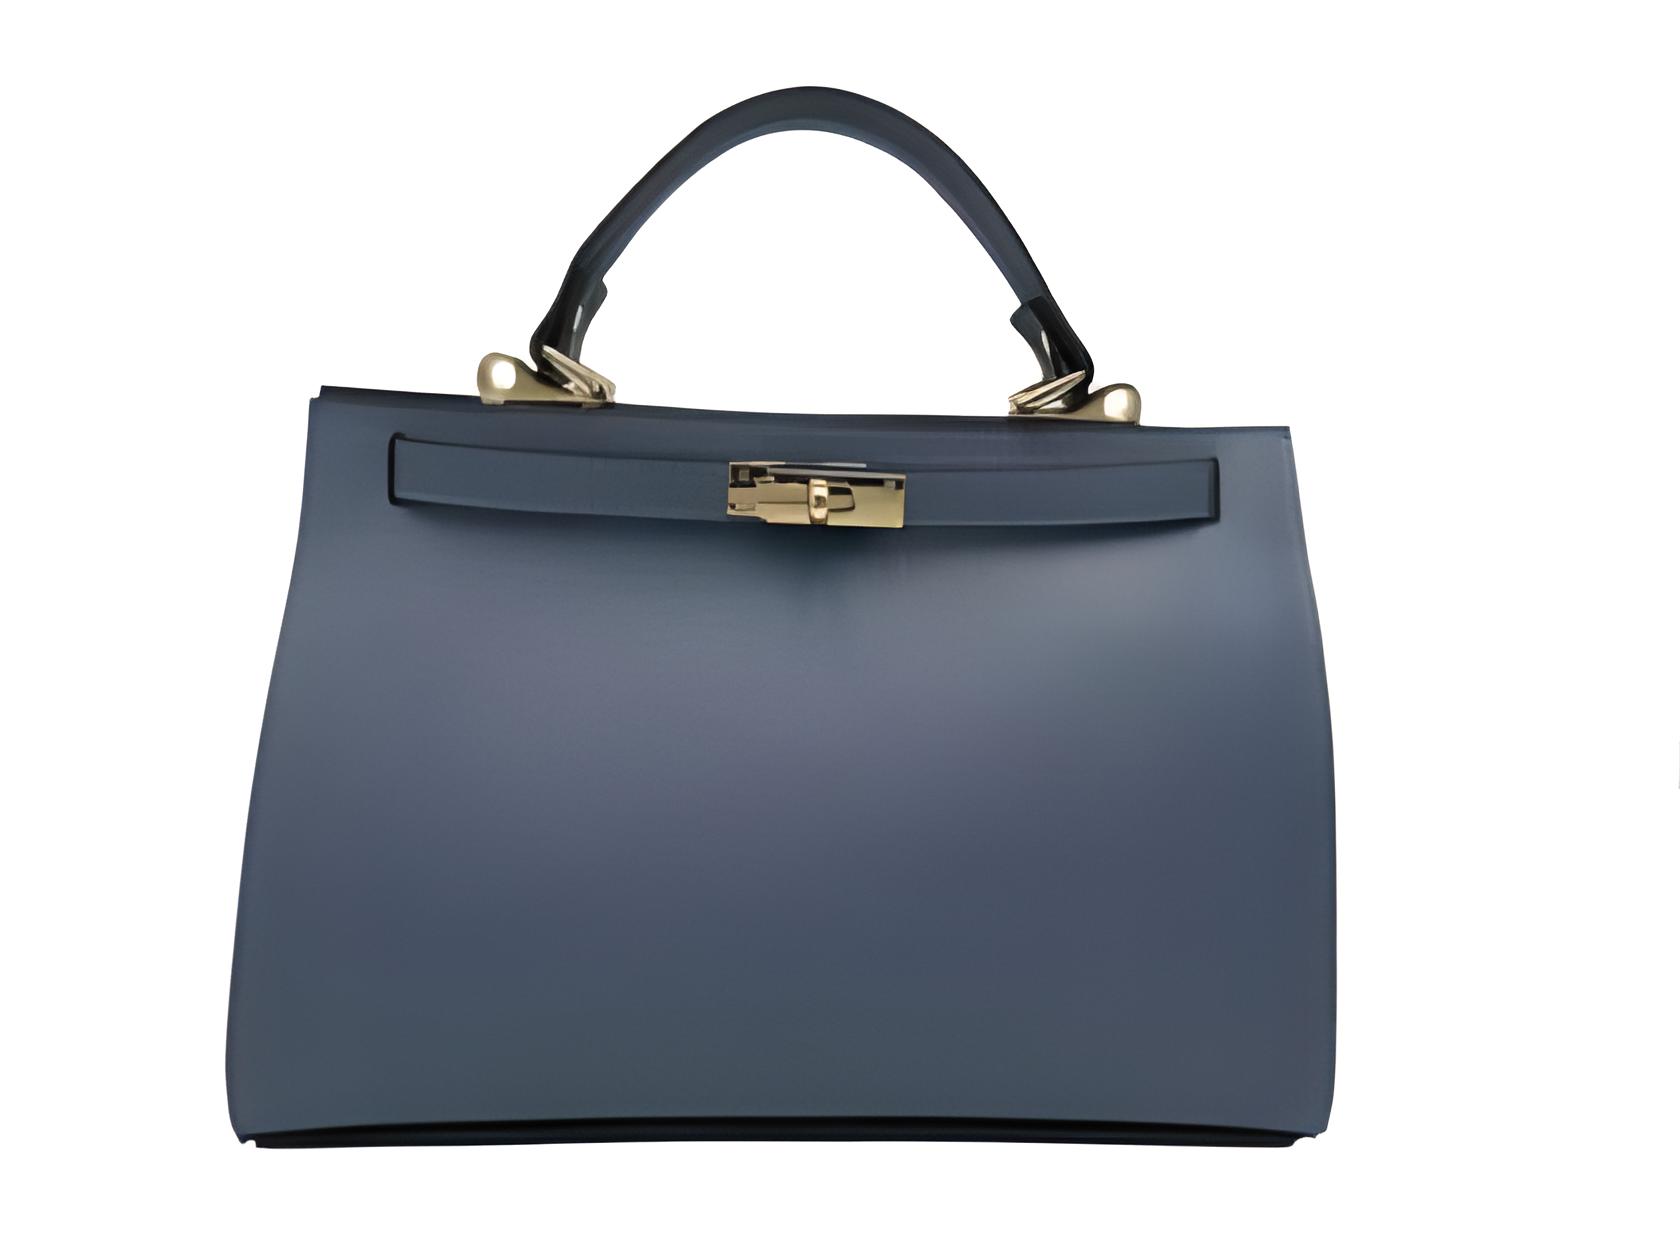 Italian handbags: manufacturers, artisans, and brands